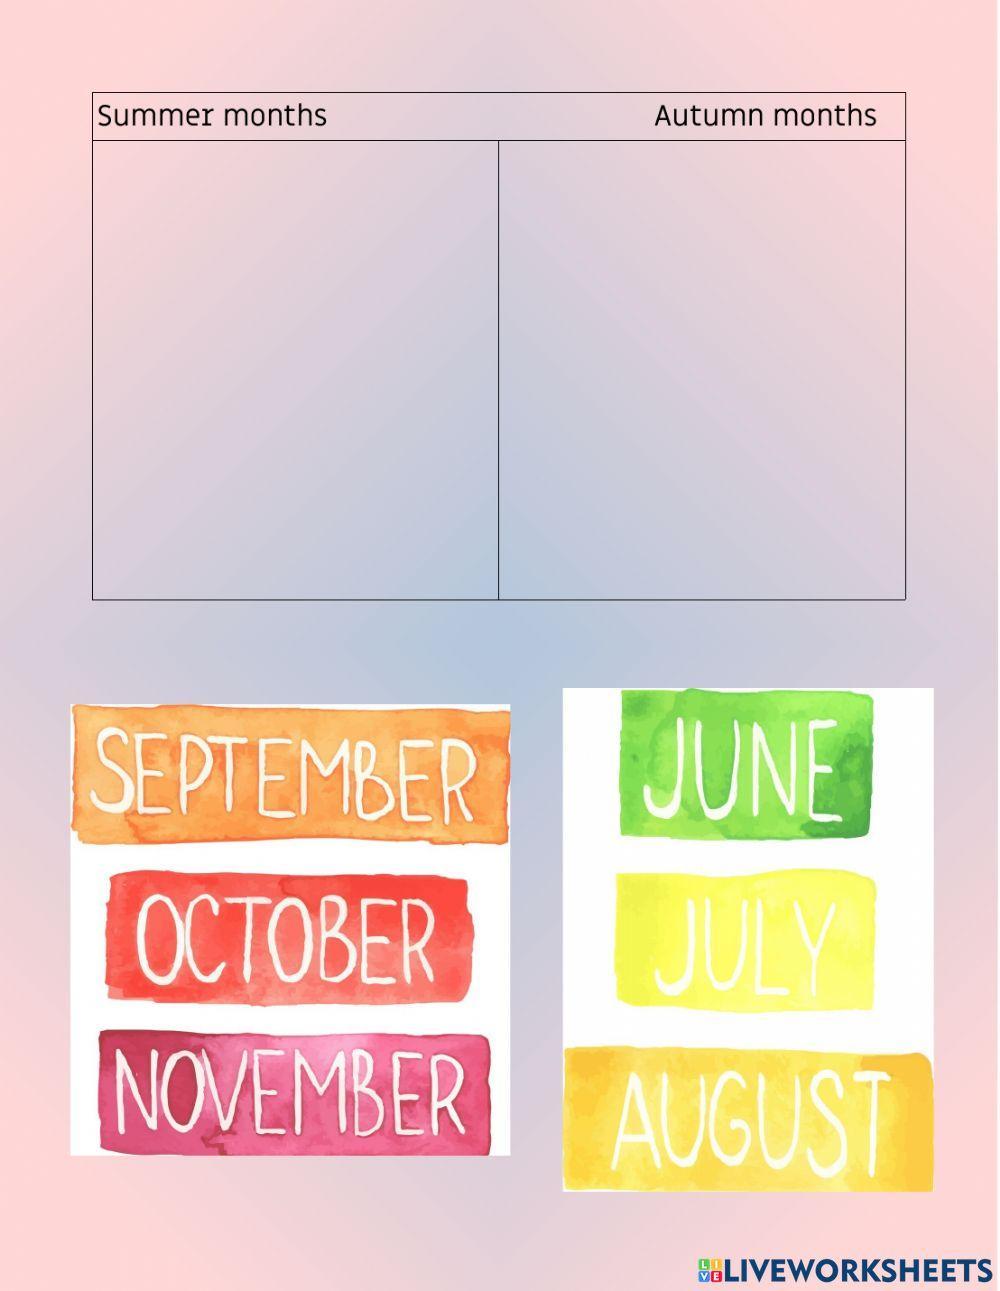 Autumn months vs. summer months